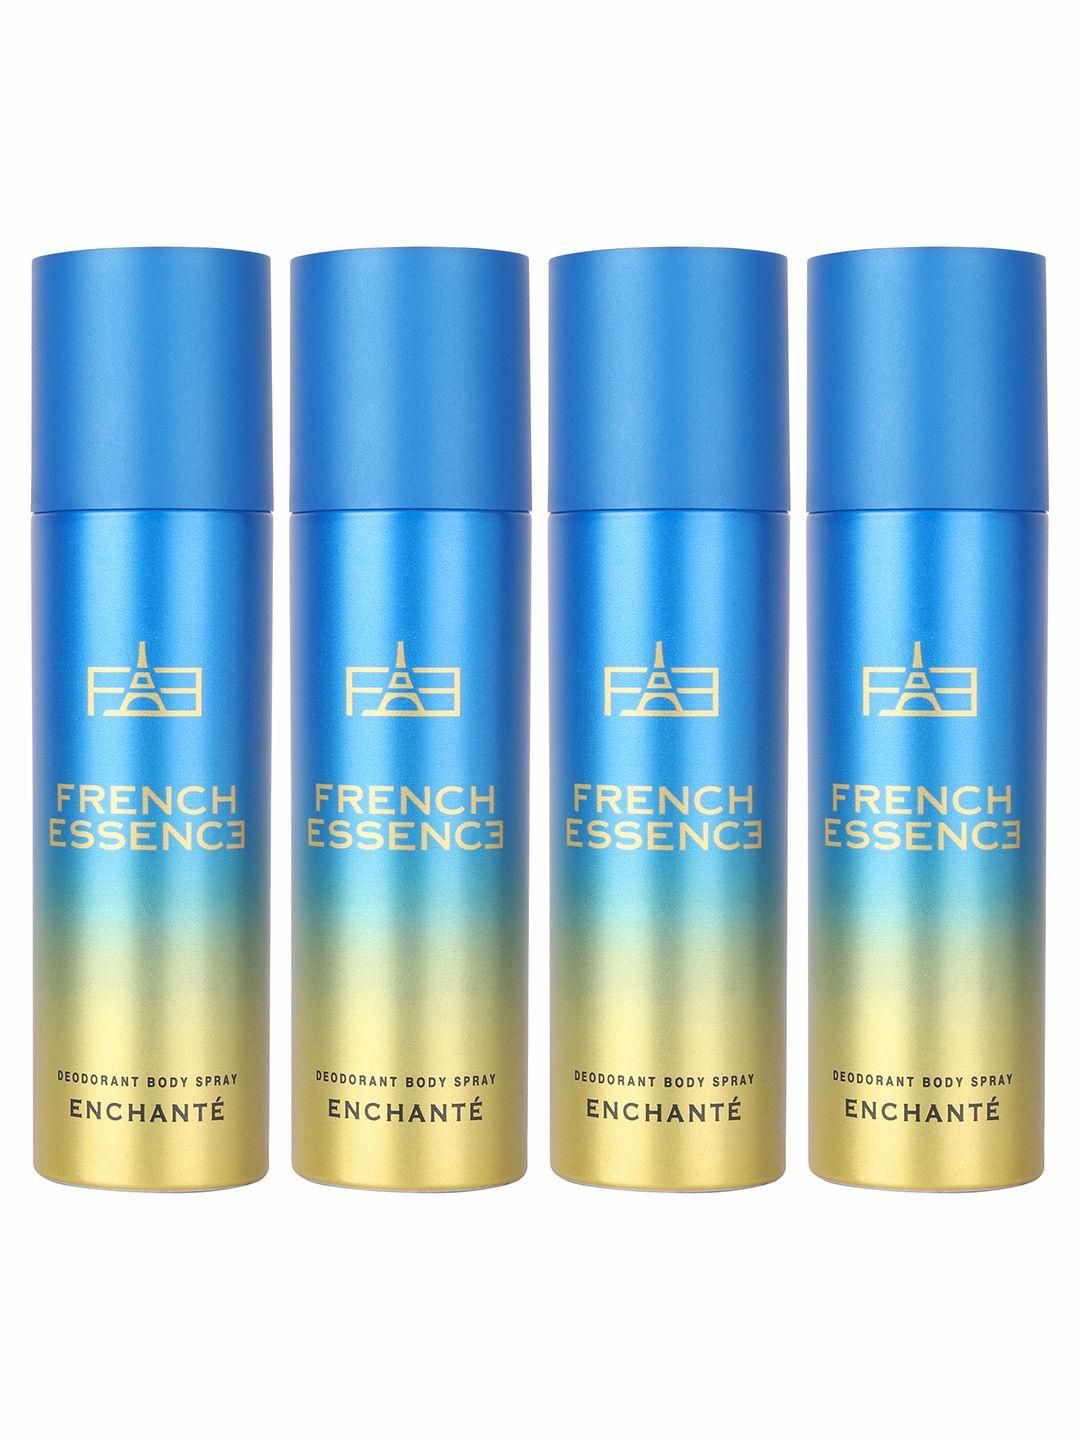 french essence pack of 4 long lasting deodorant body spray 150ml each - enchante